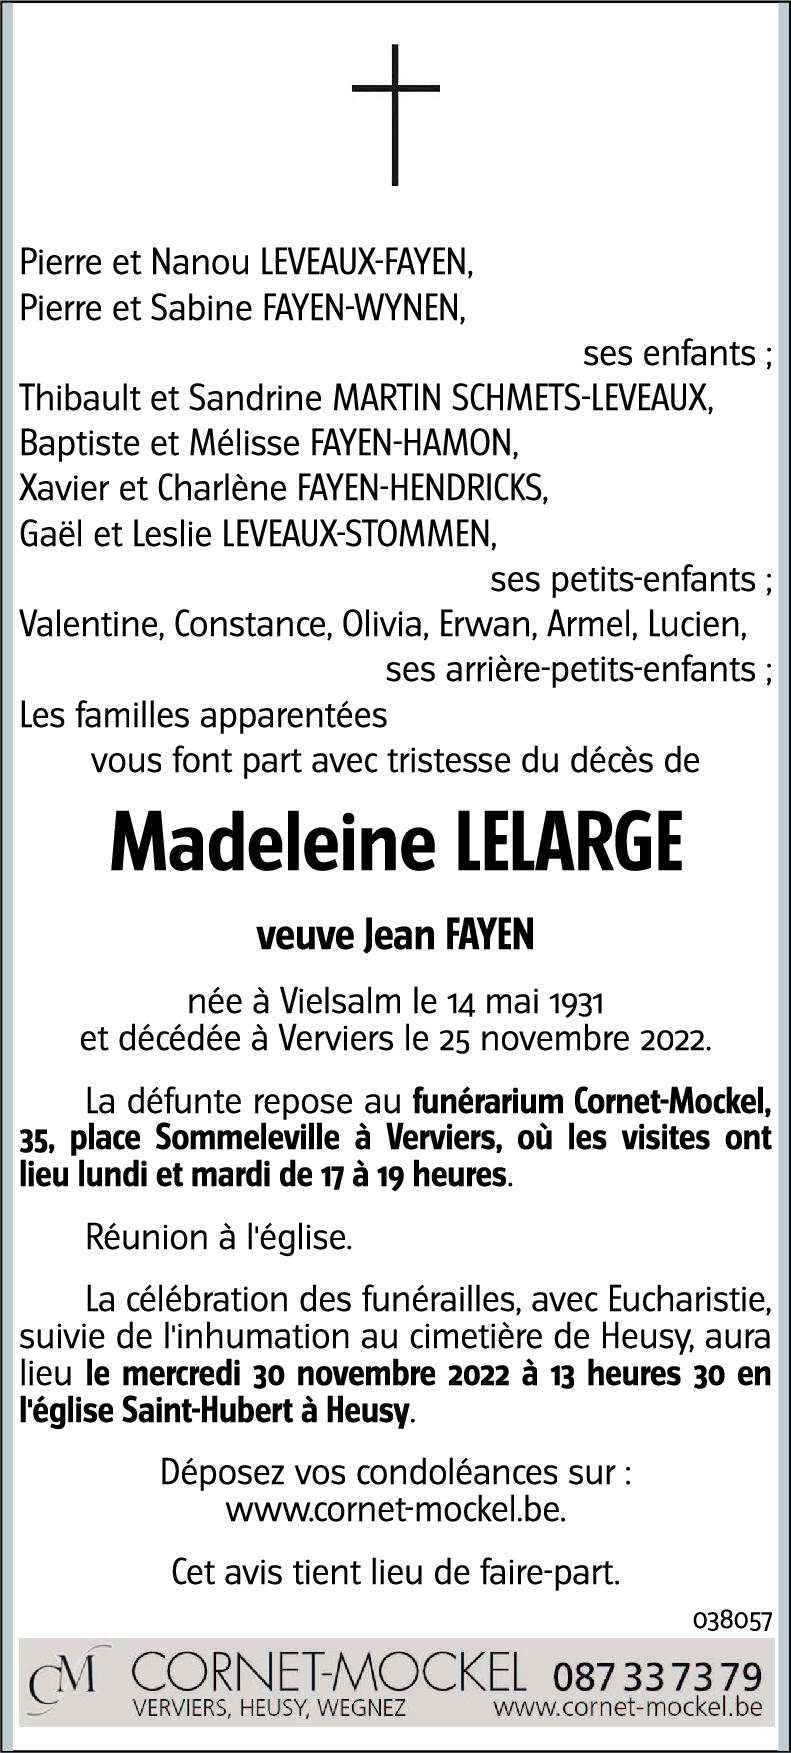 Madeleine LELARGE veuve Jean FAYEN